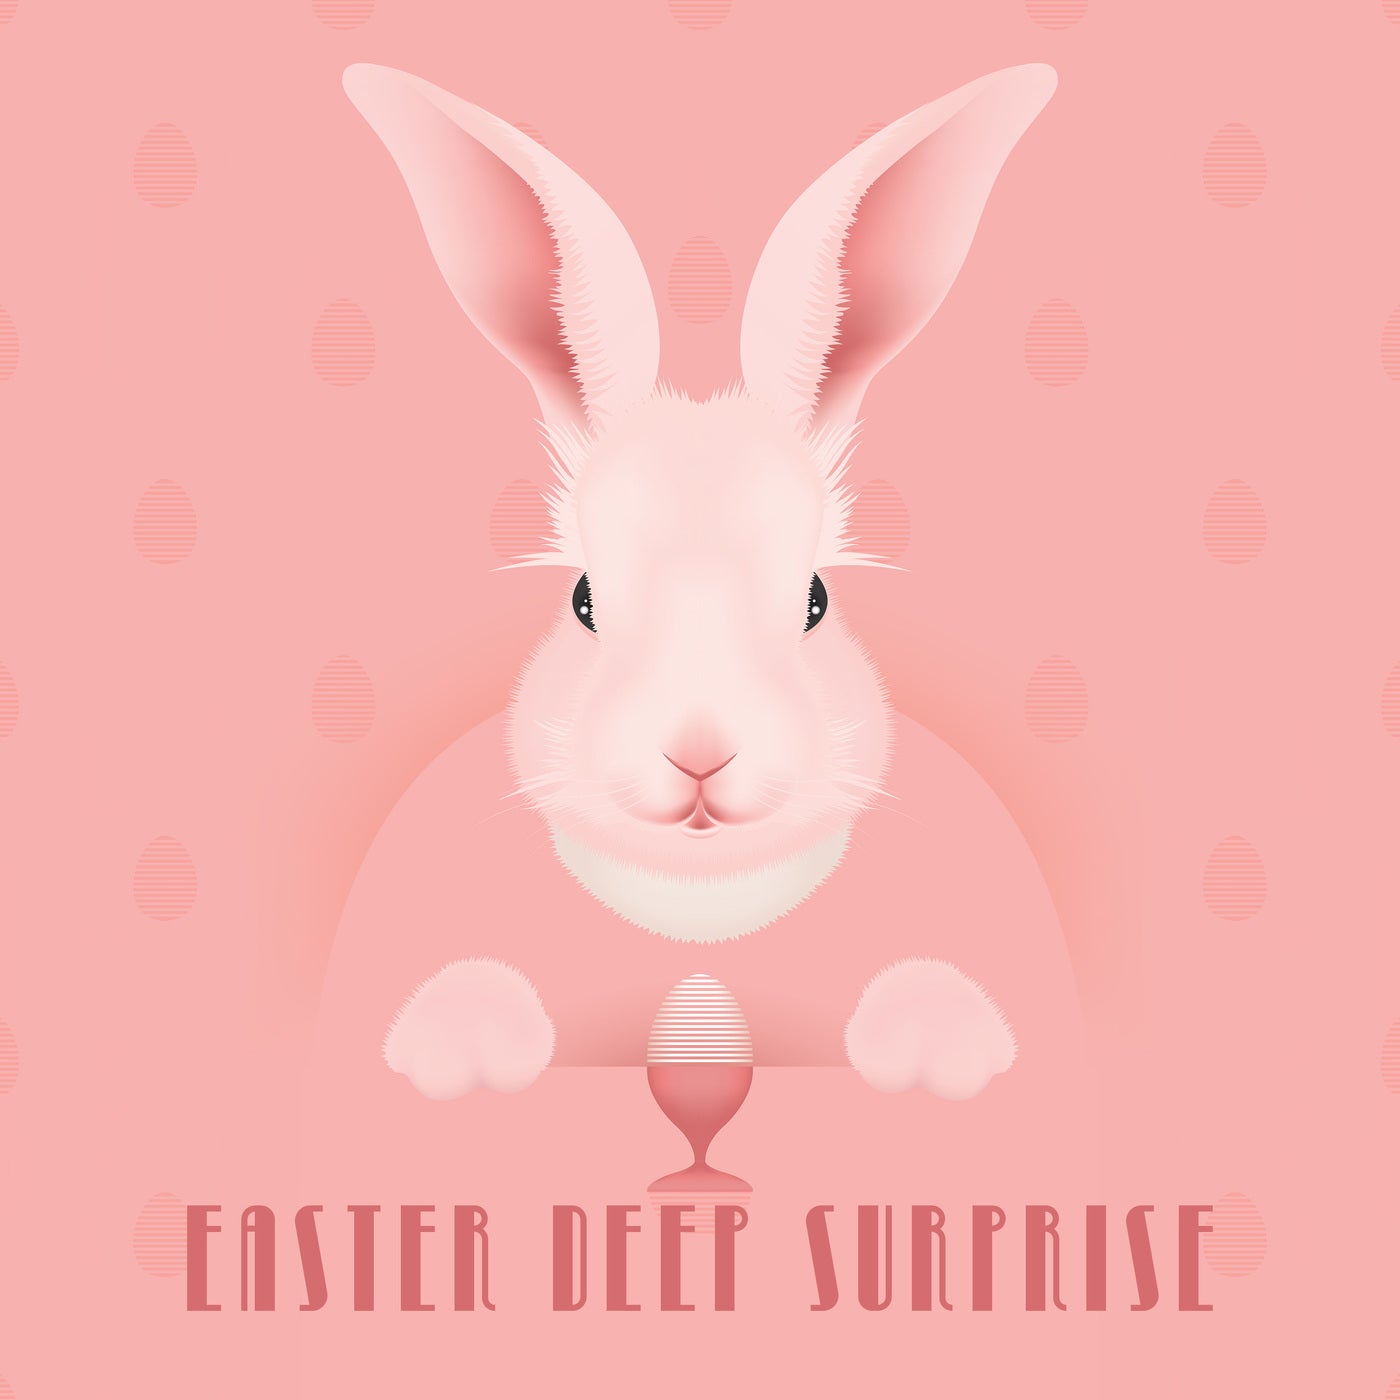 Easter Deep Surprise